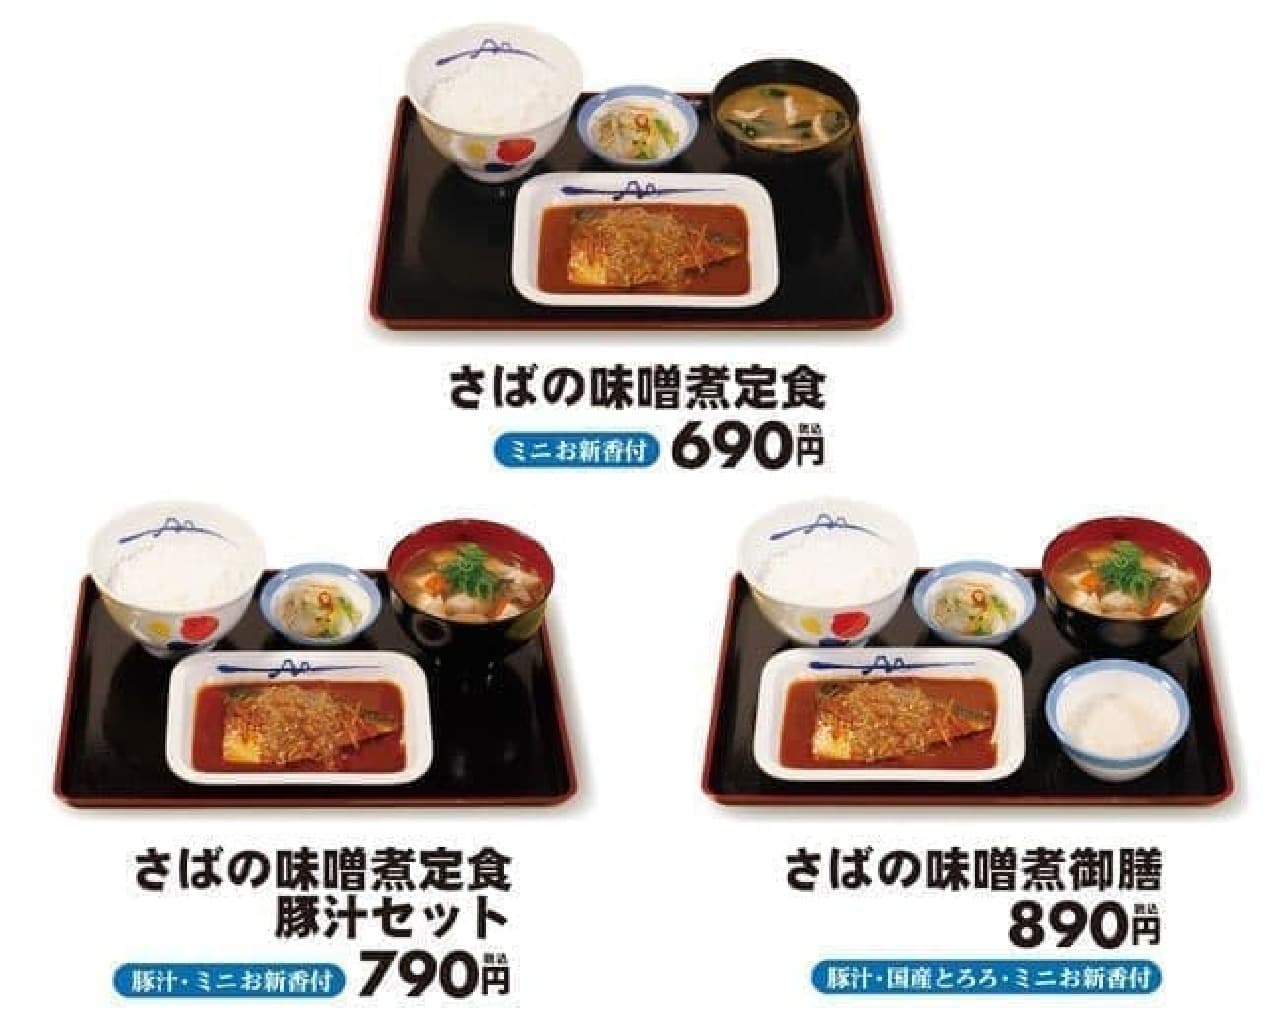 Matsuya "Mackerel miso boiled set meal" "Mackerel miso boiled set meal pork soup set" "Mackerel miso boiled set meal"